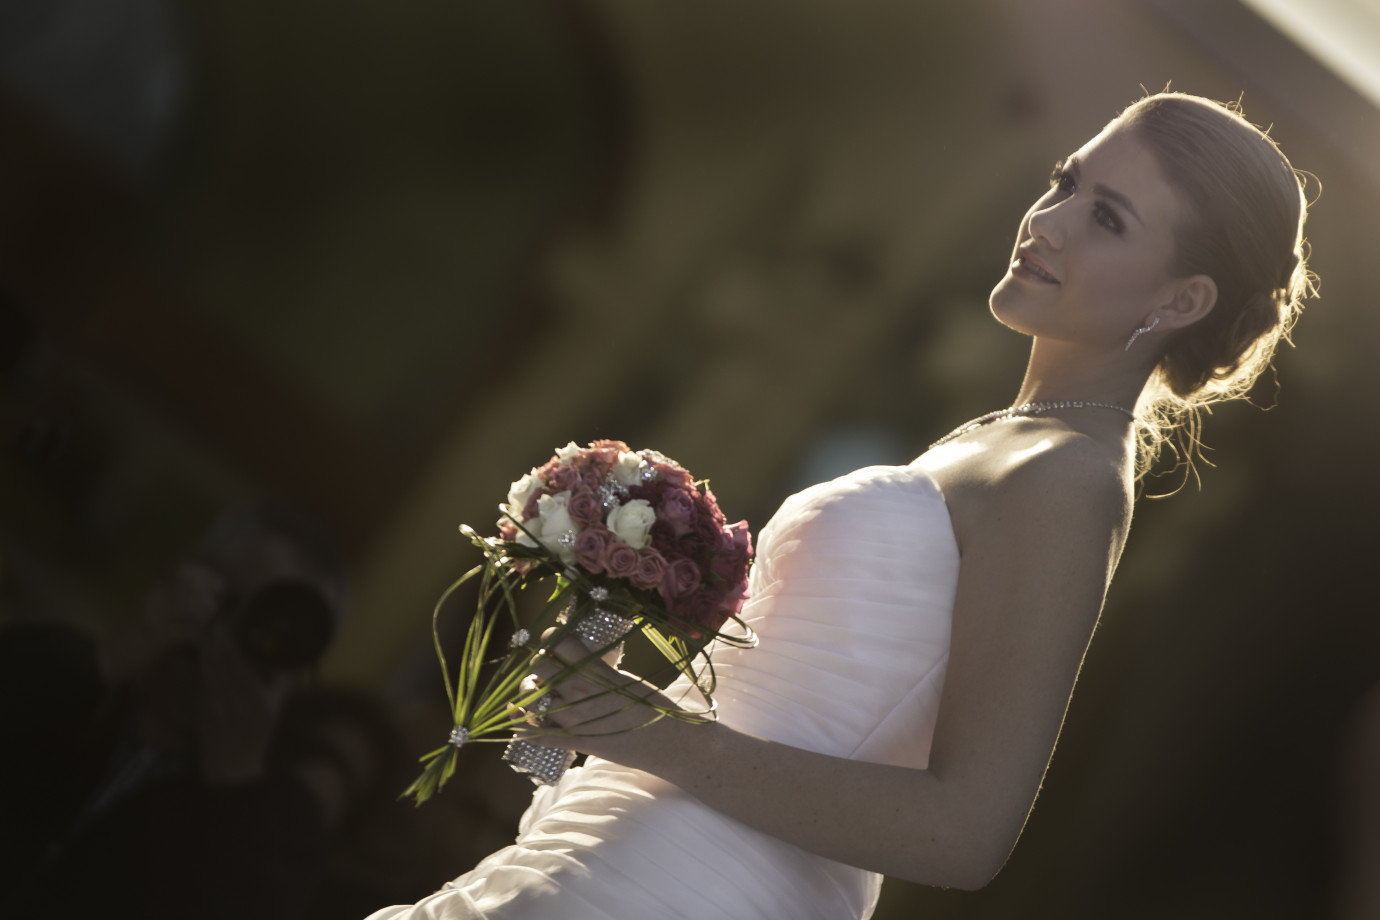 fotograf starachowice foto-image-sztandera portfolio zdjecia slubne inspiracje wesele plener slubny sesja slubna